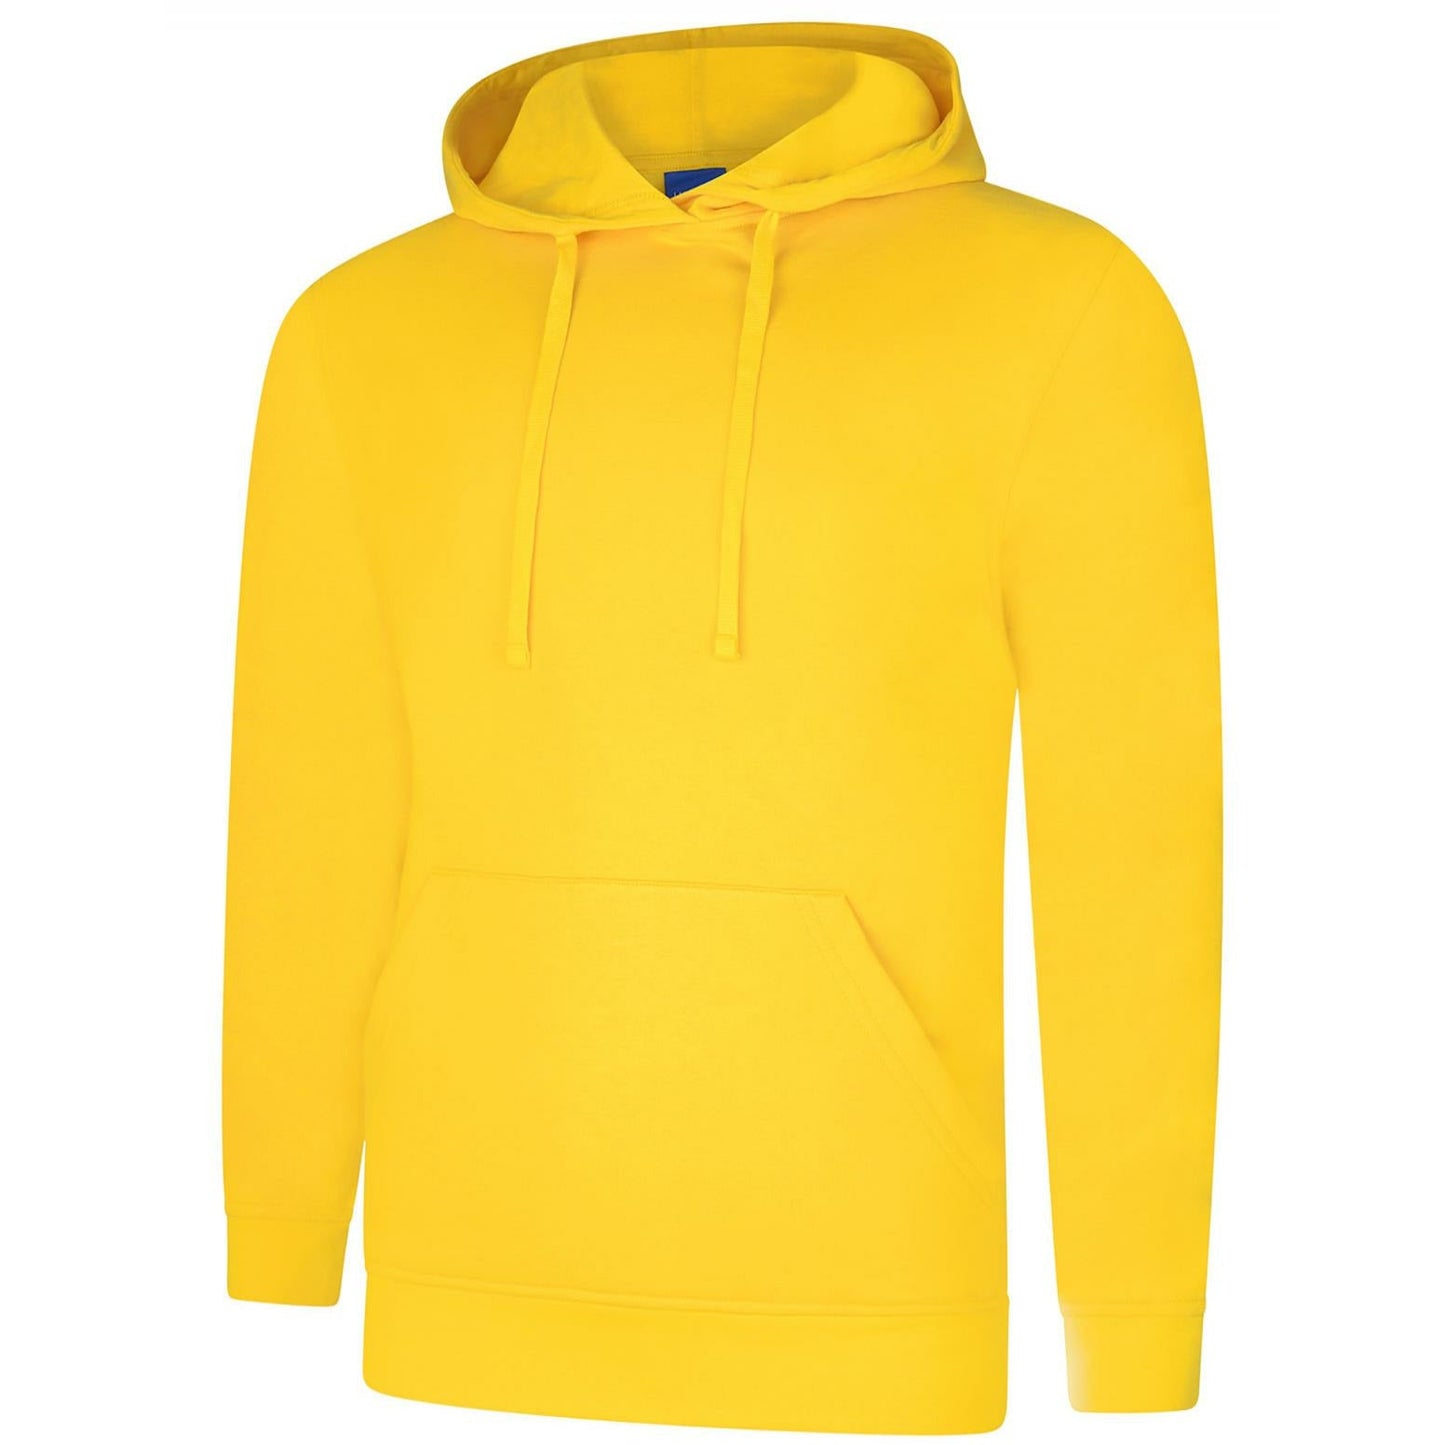 Deluxe Hooded Sweatshirt (L - 2XL) Yellow